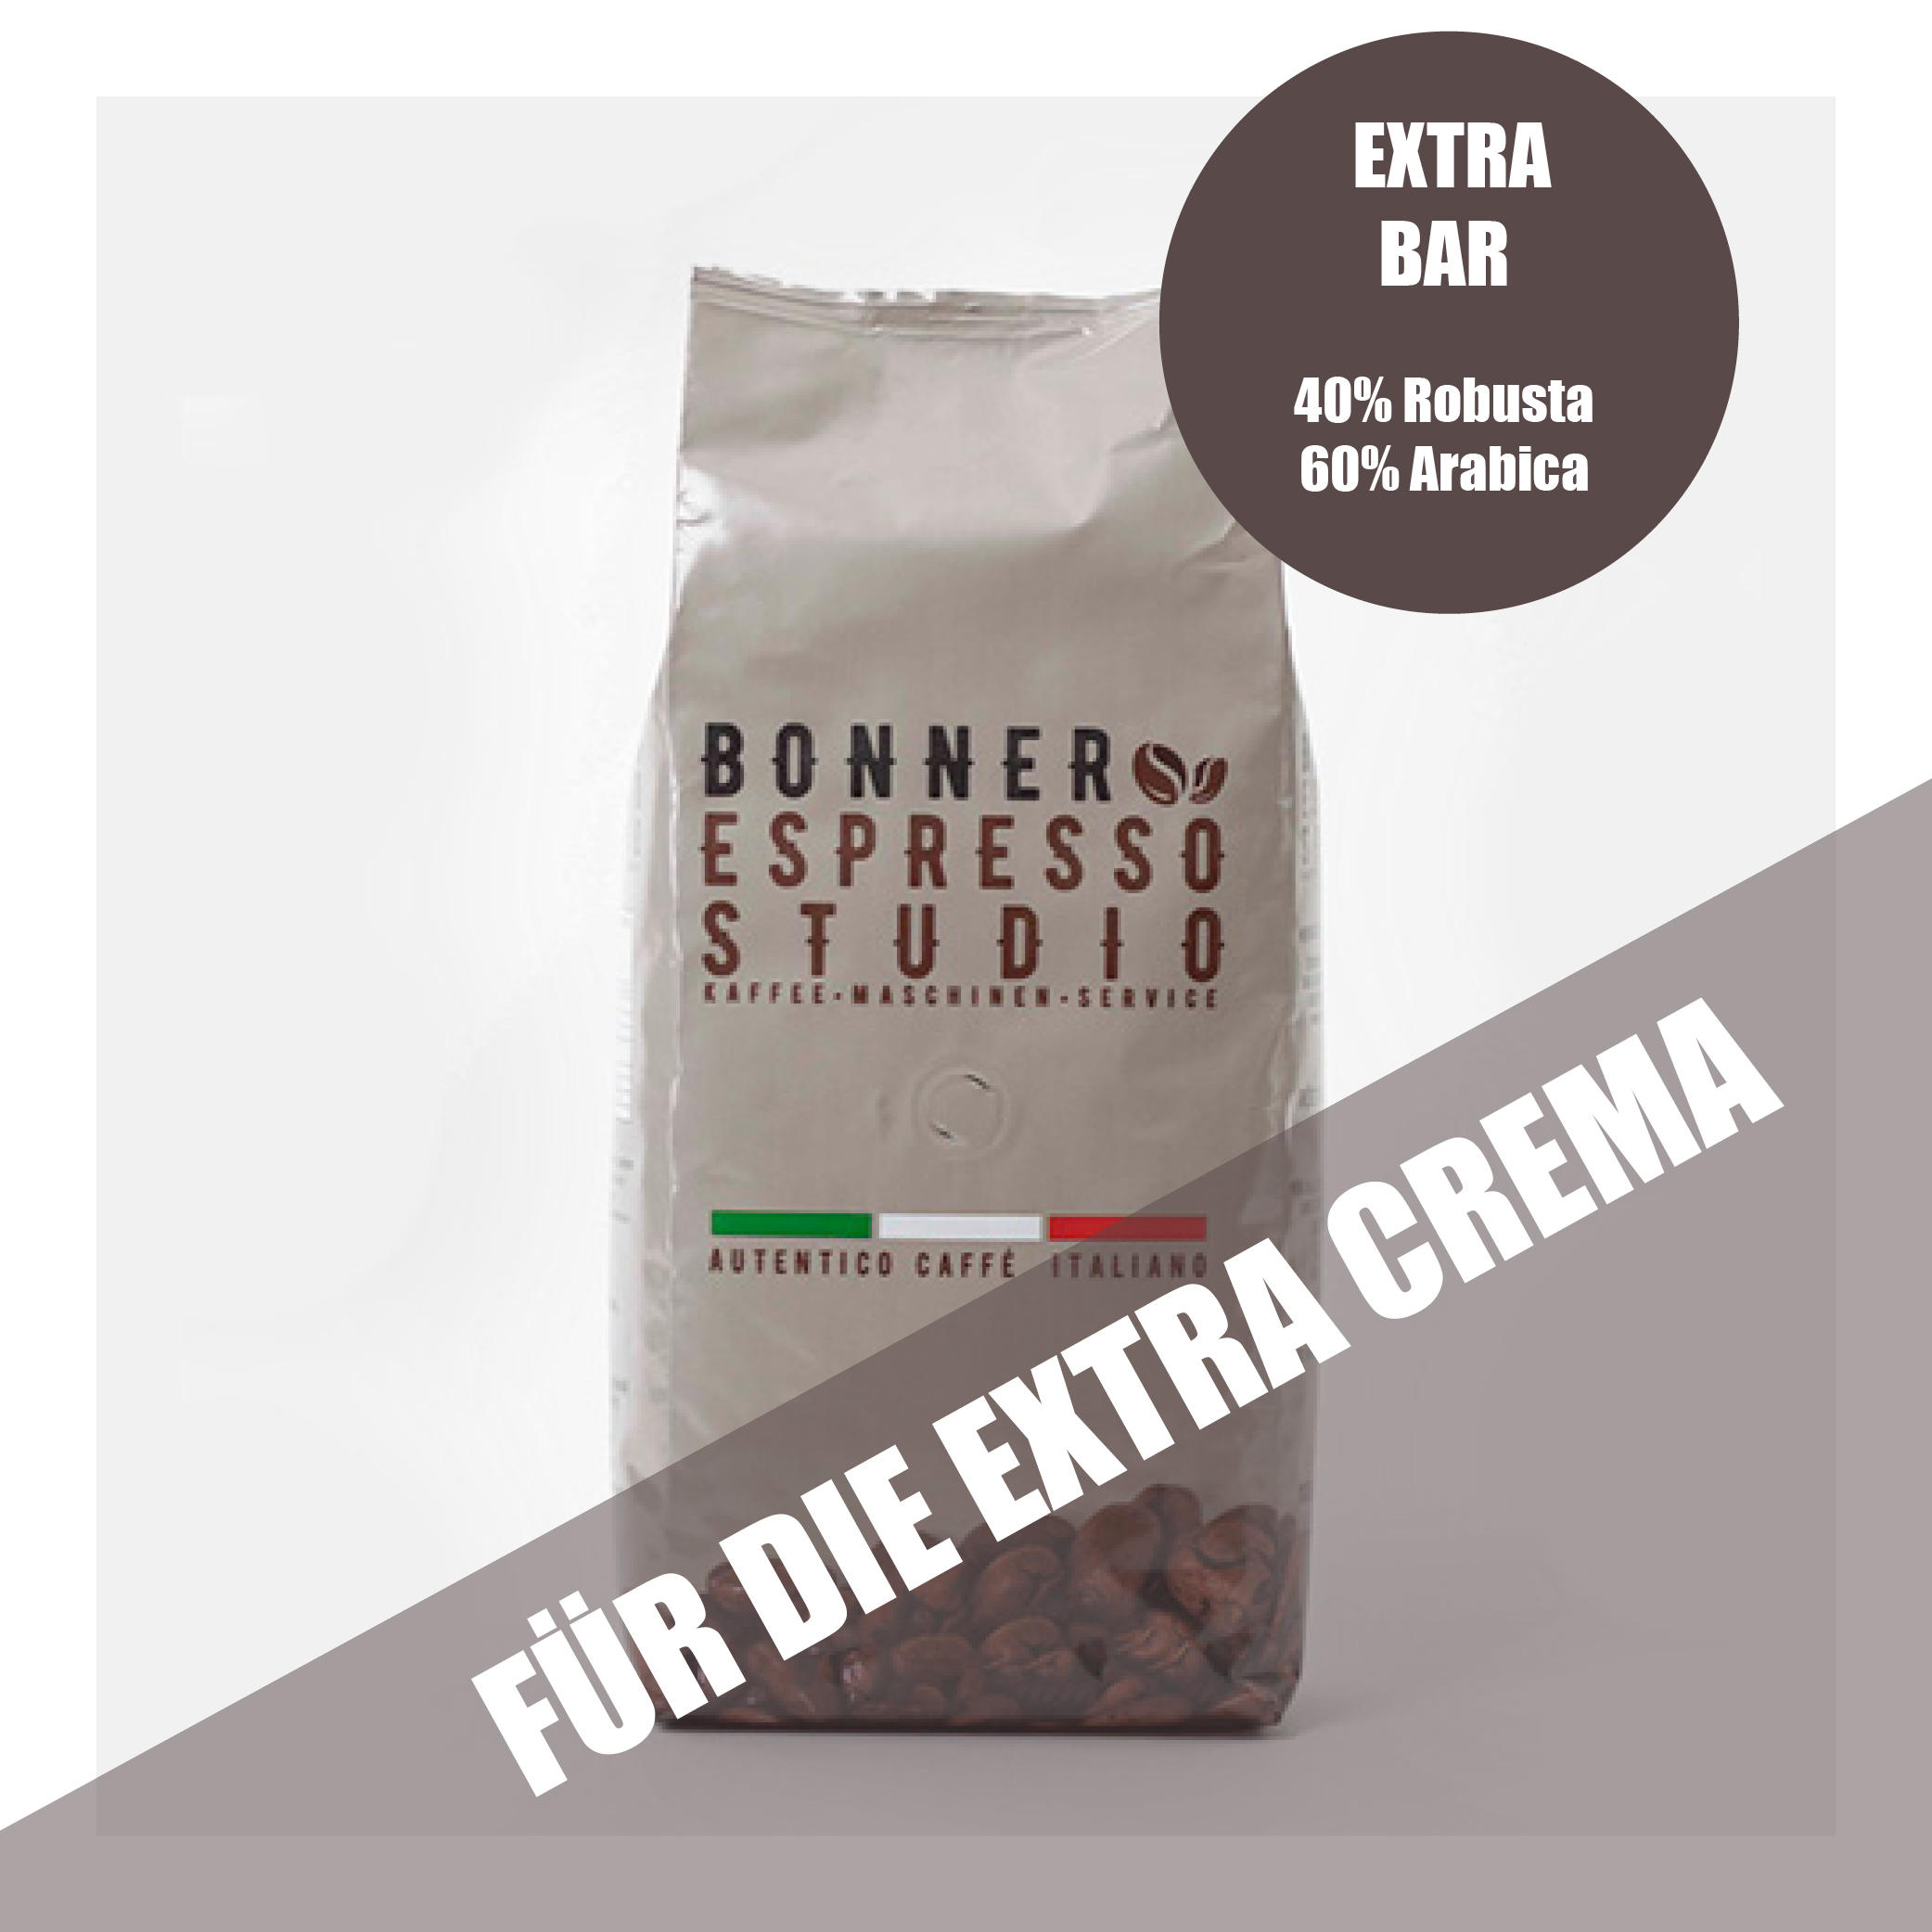 Bilder Bonner Espresso Studio GmbH I Kaffeemaschinen & Kaffee I Reparaturen Bonn